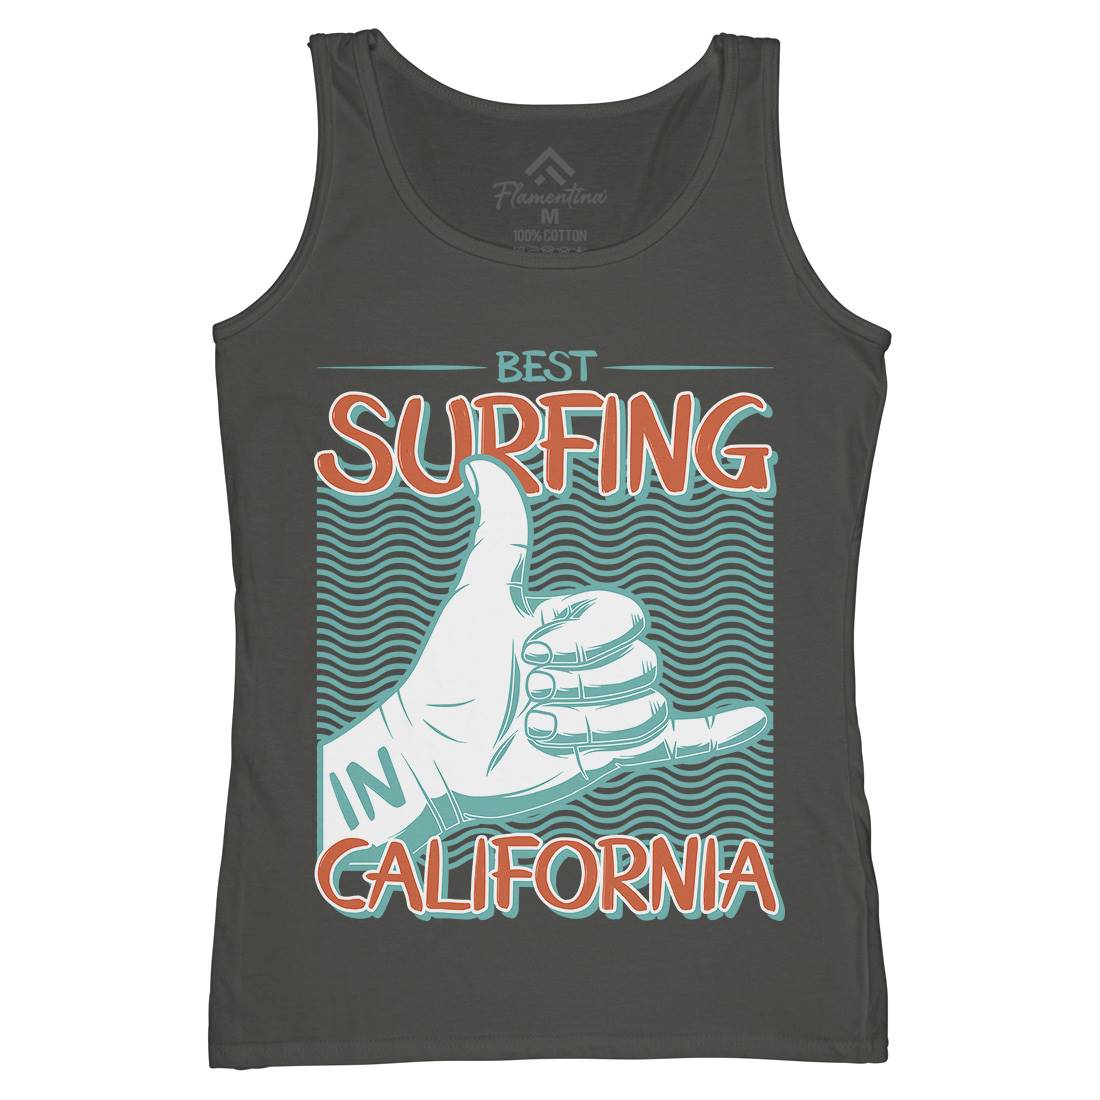 Best Surfing Womens Organic Tank Top Vest Surf D908